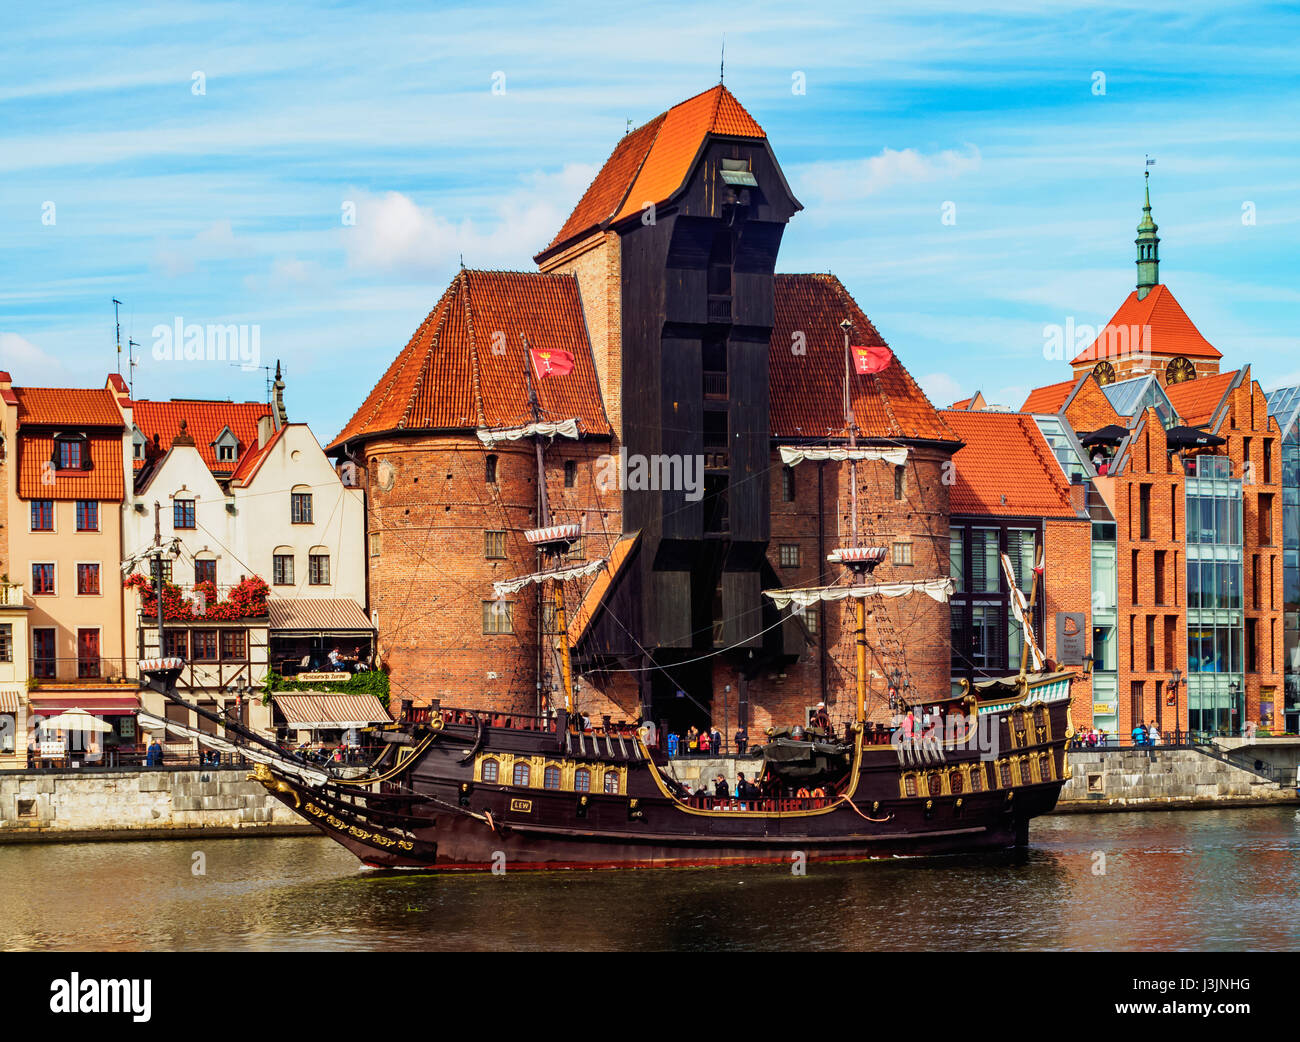 Poland, Pomeranian Voivodeship, Gdansk, Old Town, Motlawa River and Medieval Port Crane Zuraw Stock Photo